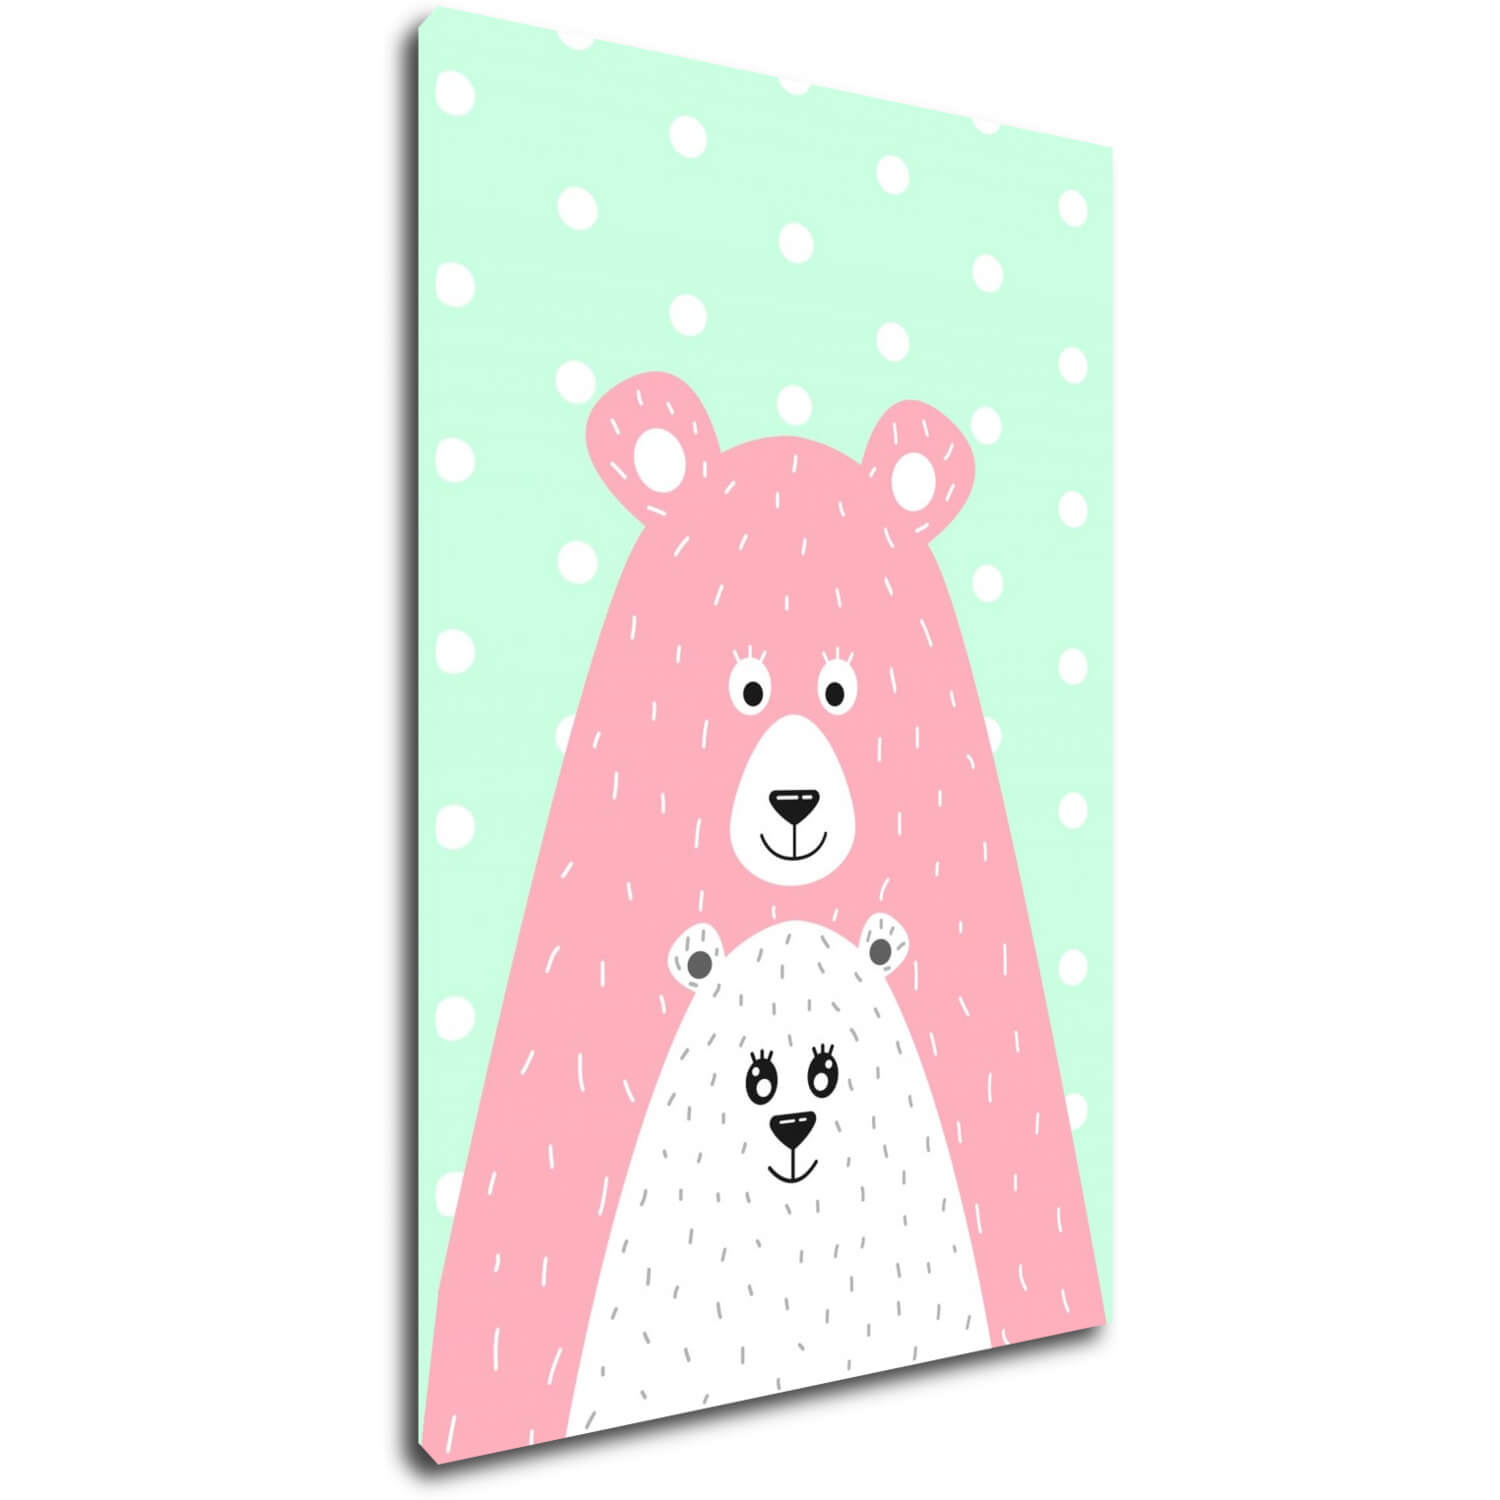 Obraz Pink blue bear - 40 x 60 cm